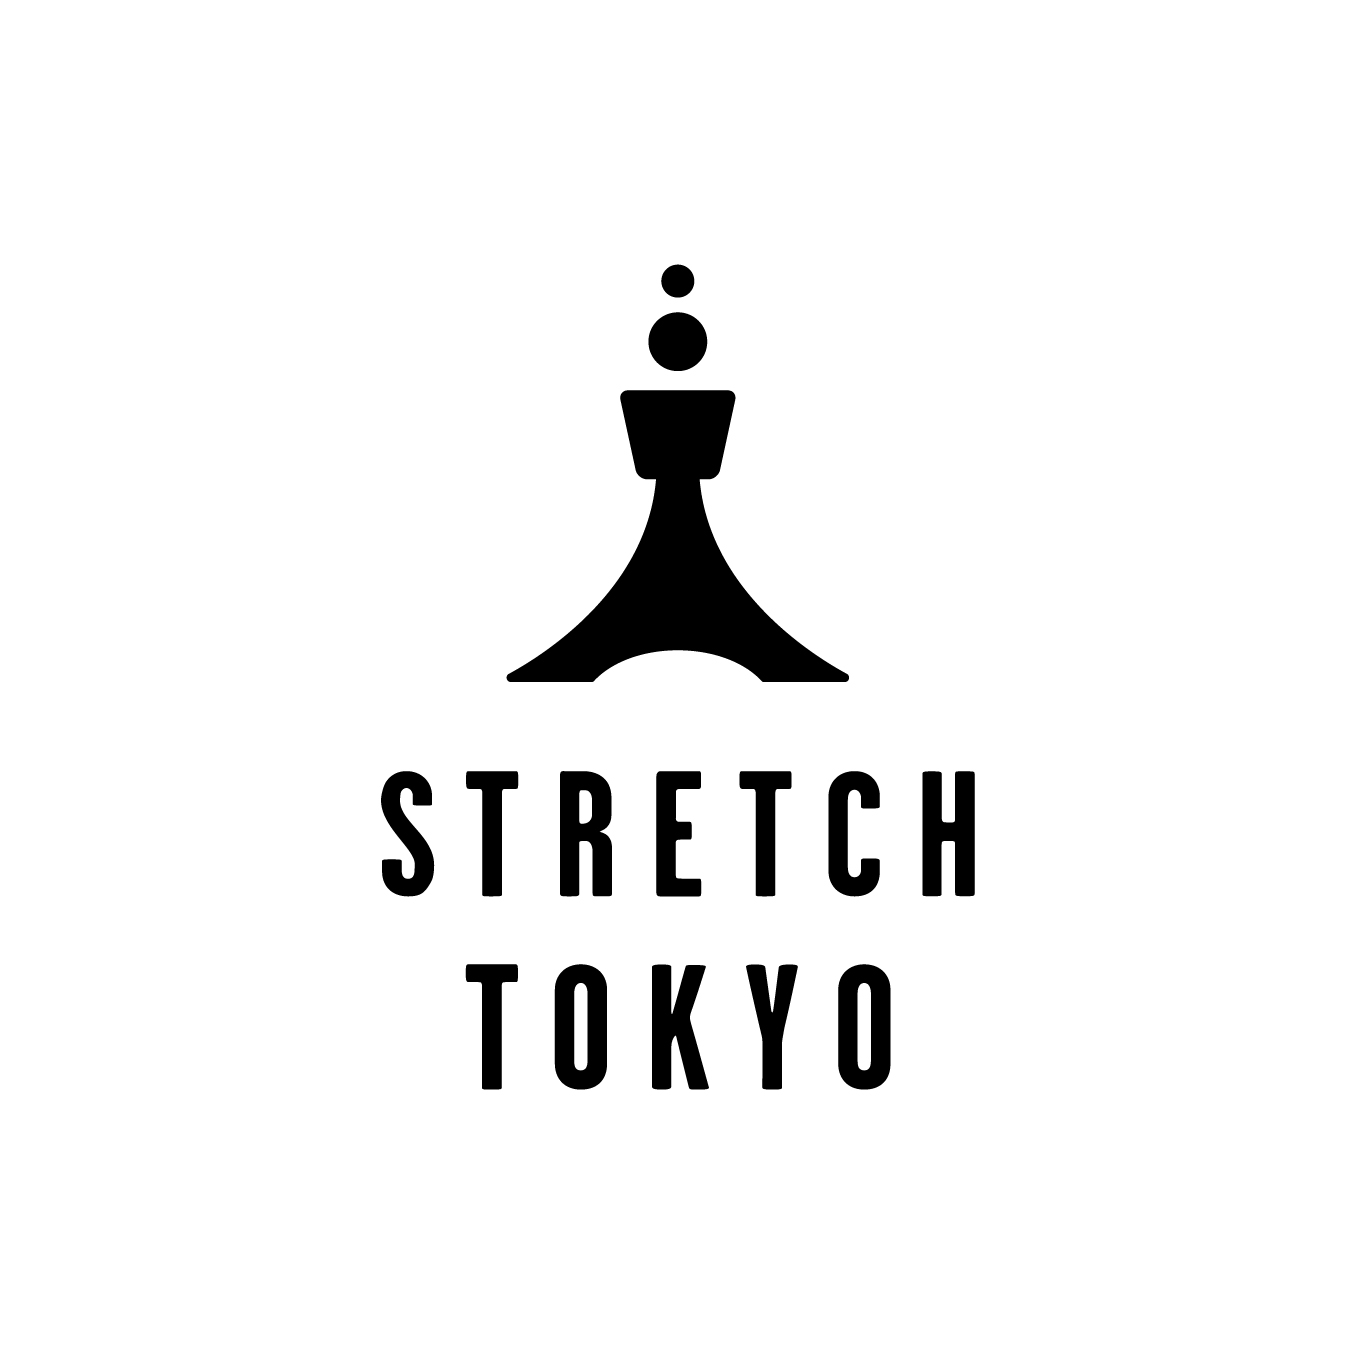 STRETCH TOKYO